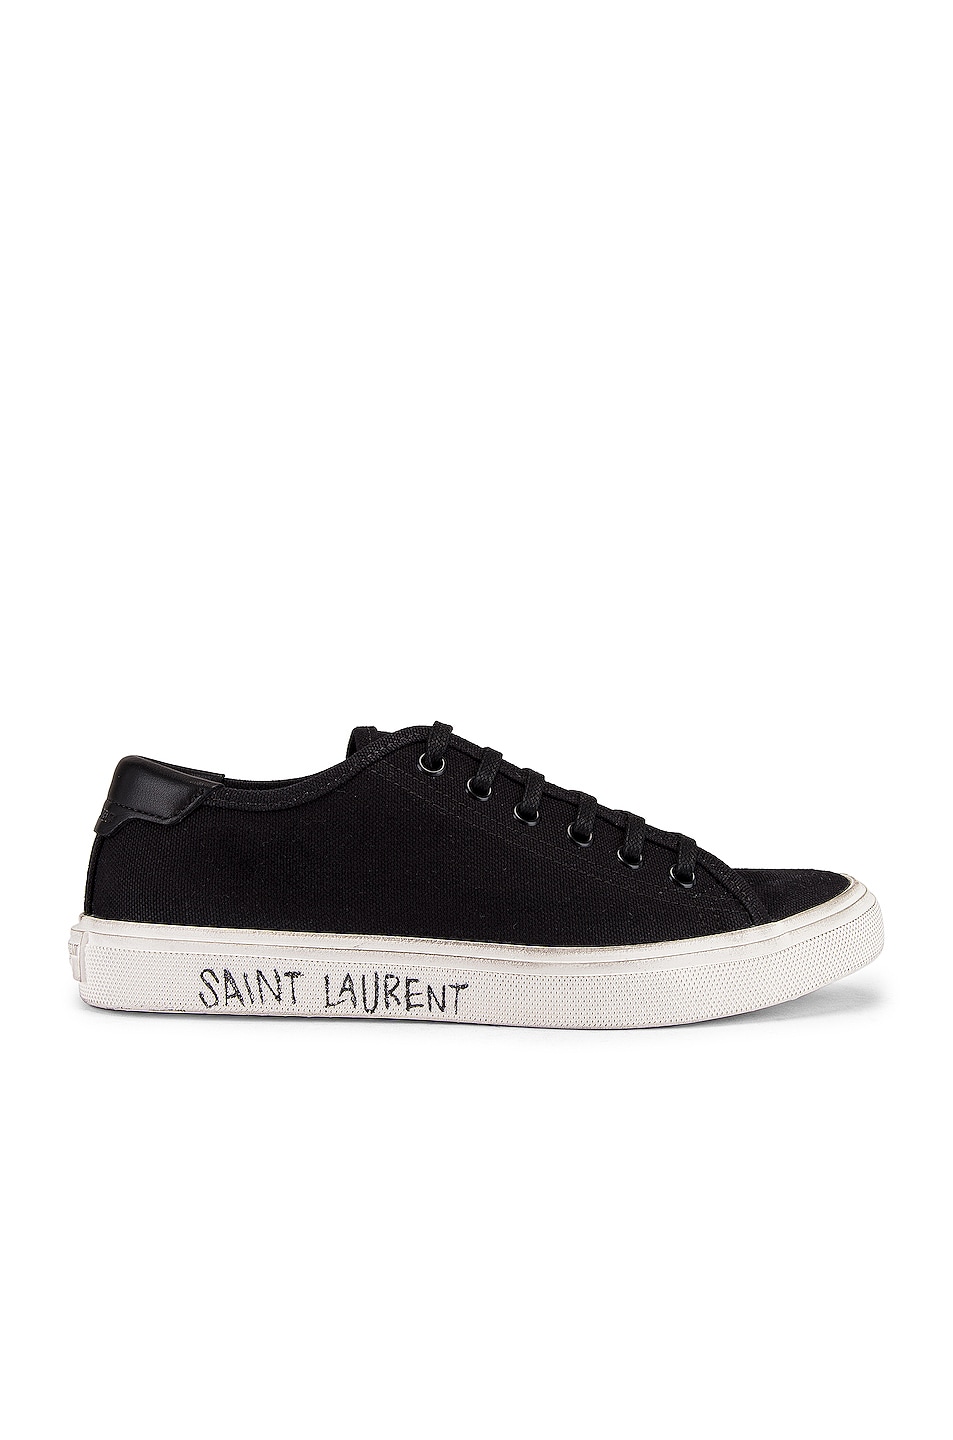 Image 1 of Saint Laurent Malibu Sneakers in Nero & Nero